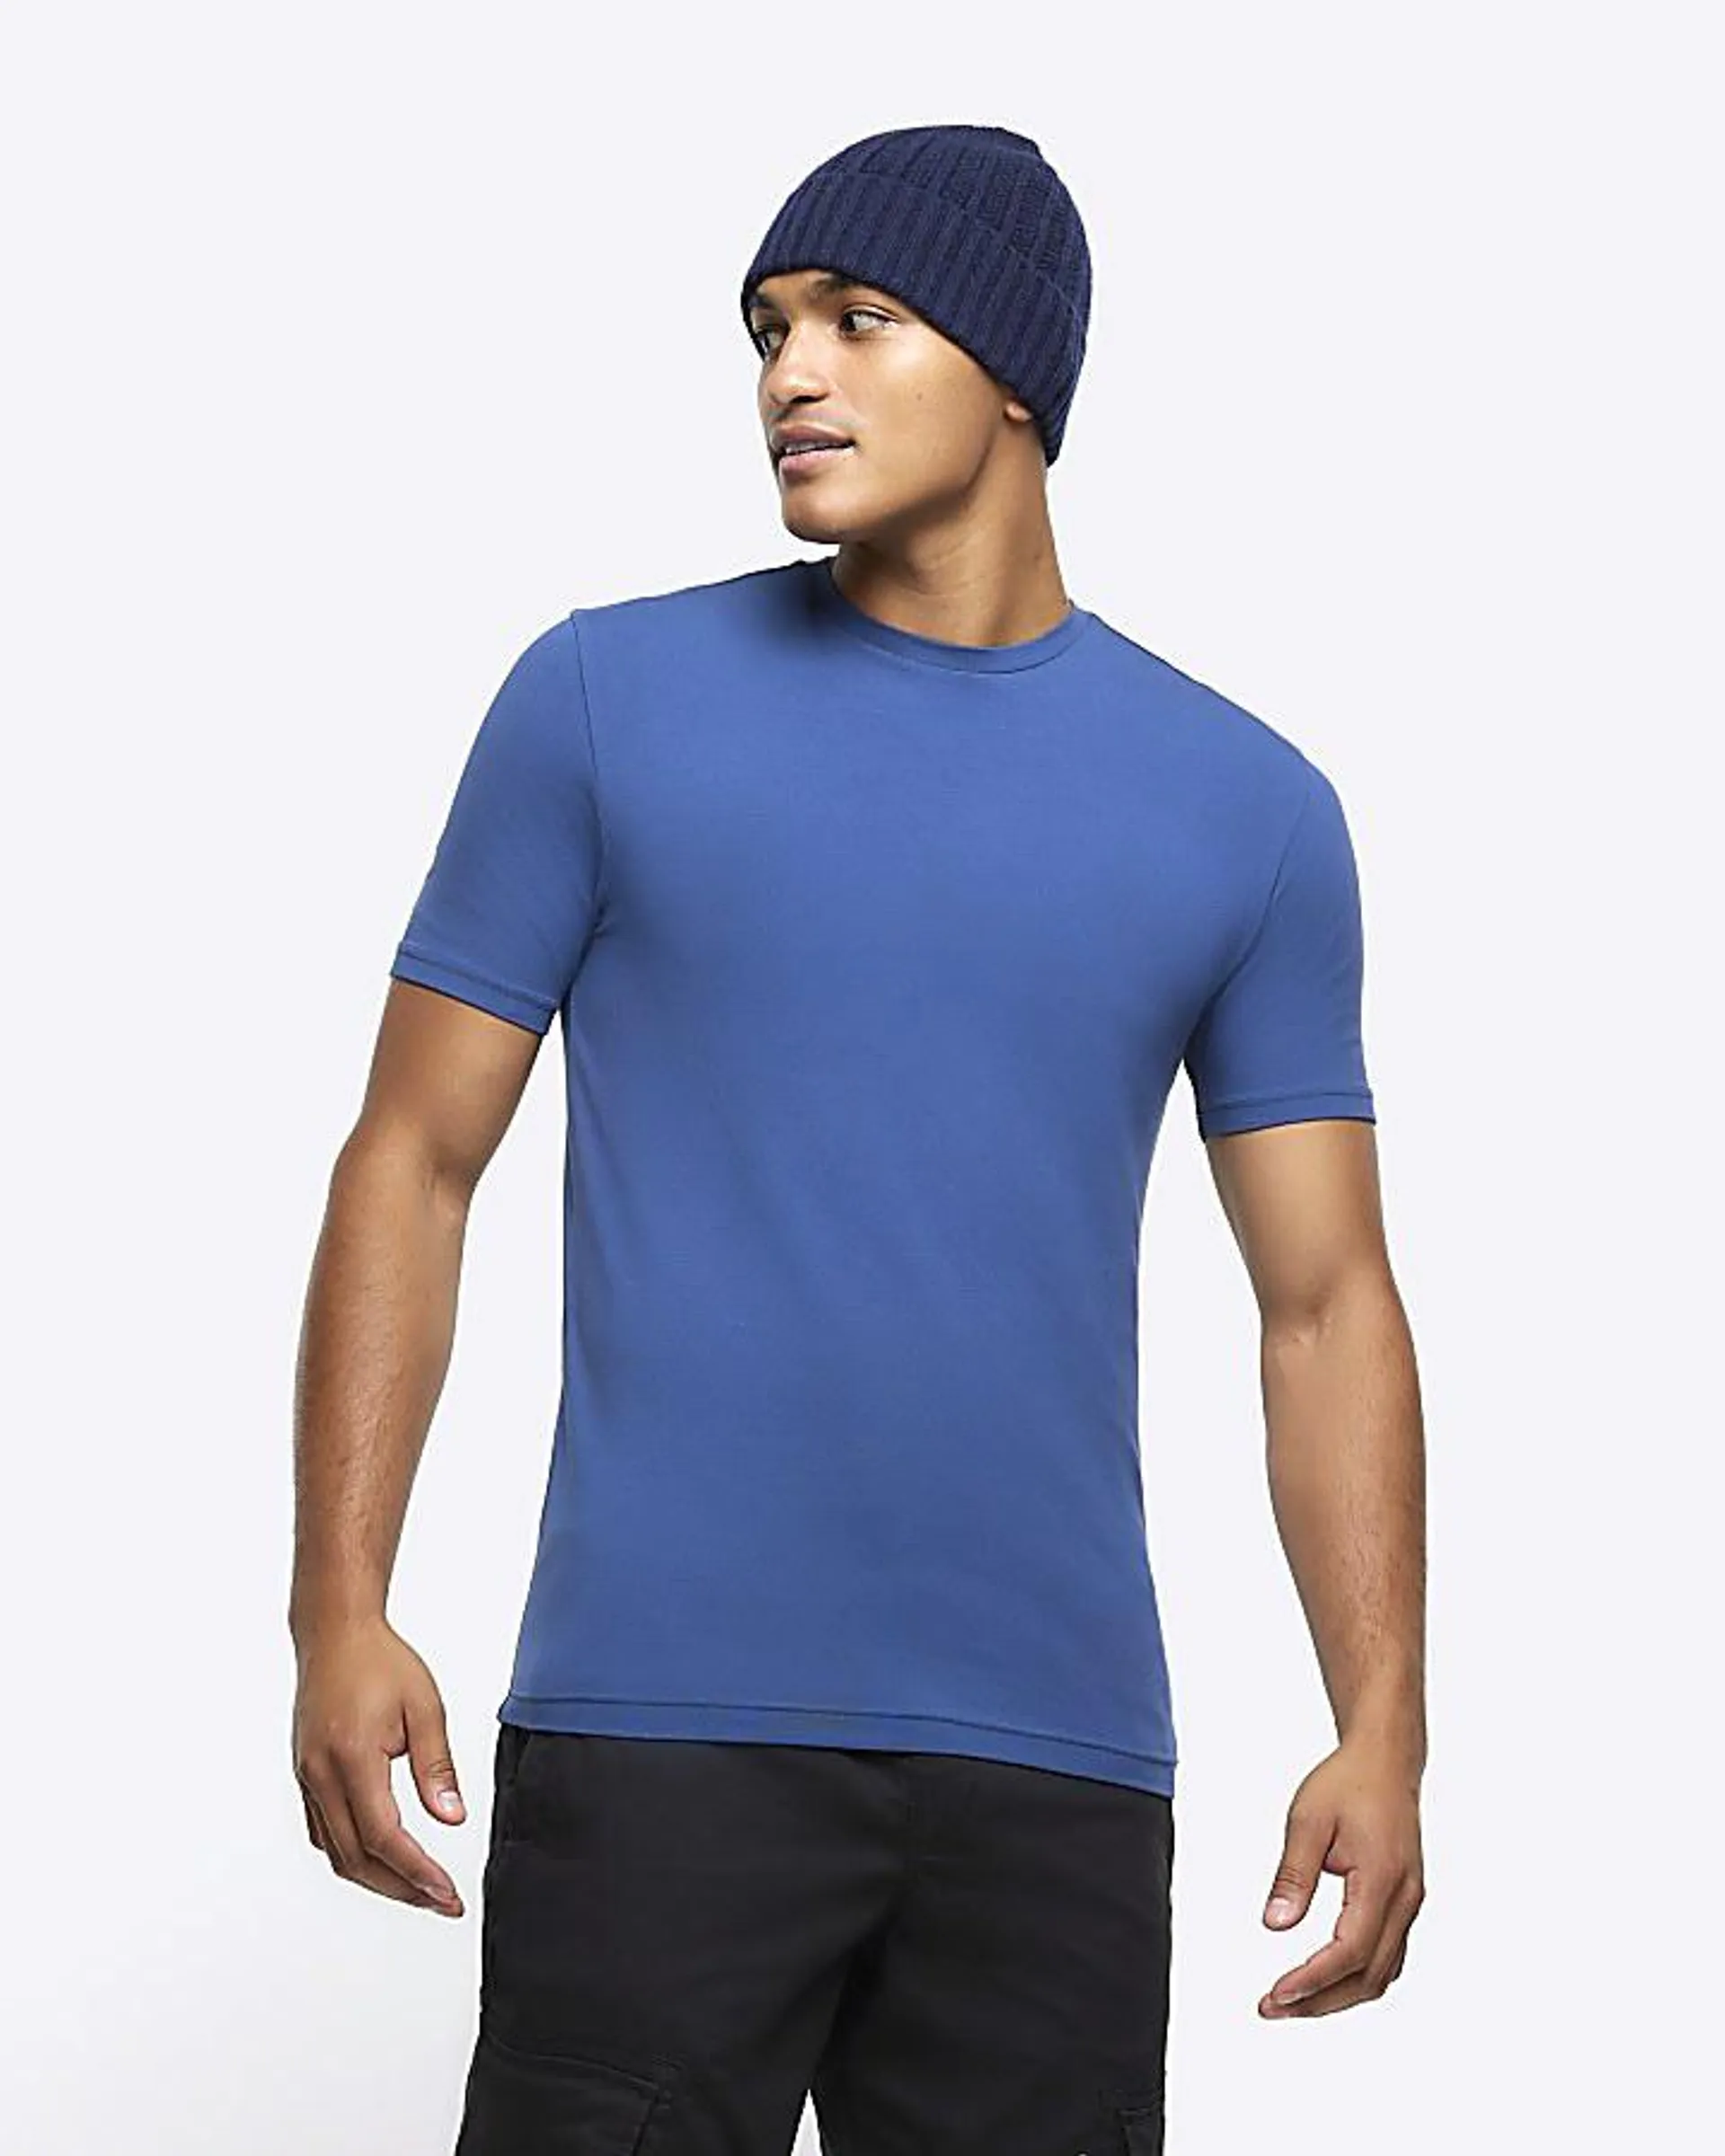 Blue muscle fit t-shirt